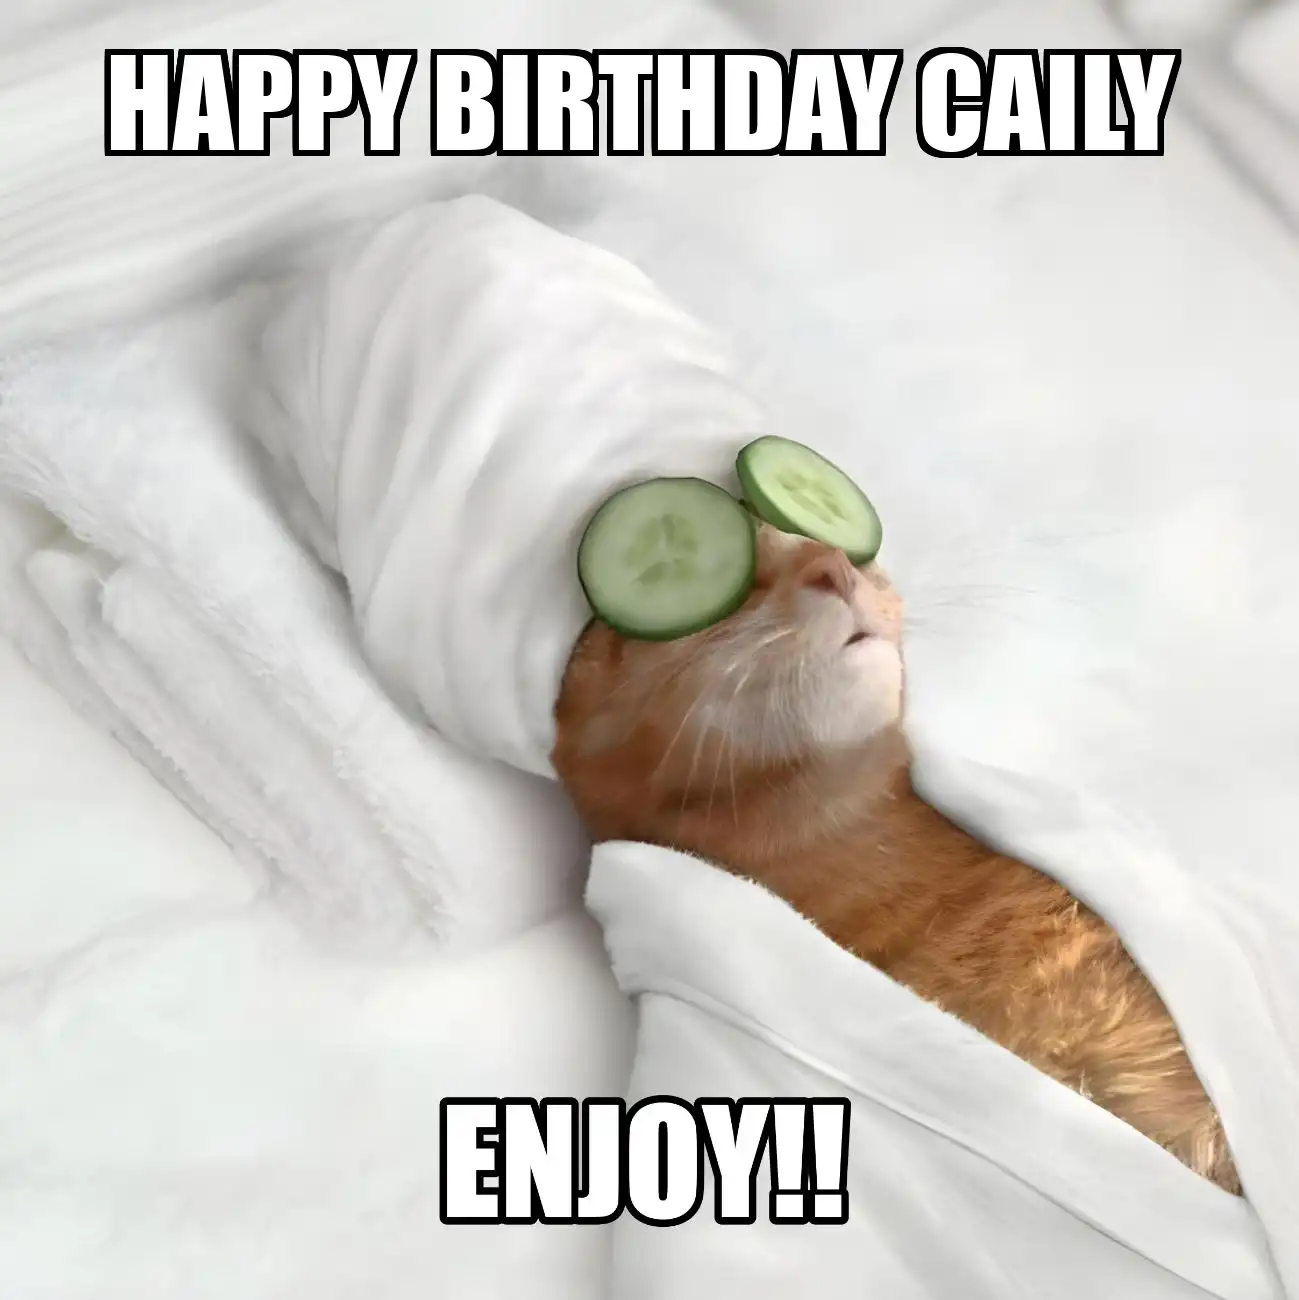 Happy Birthday Caily Enjoy Cat Meme